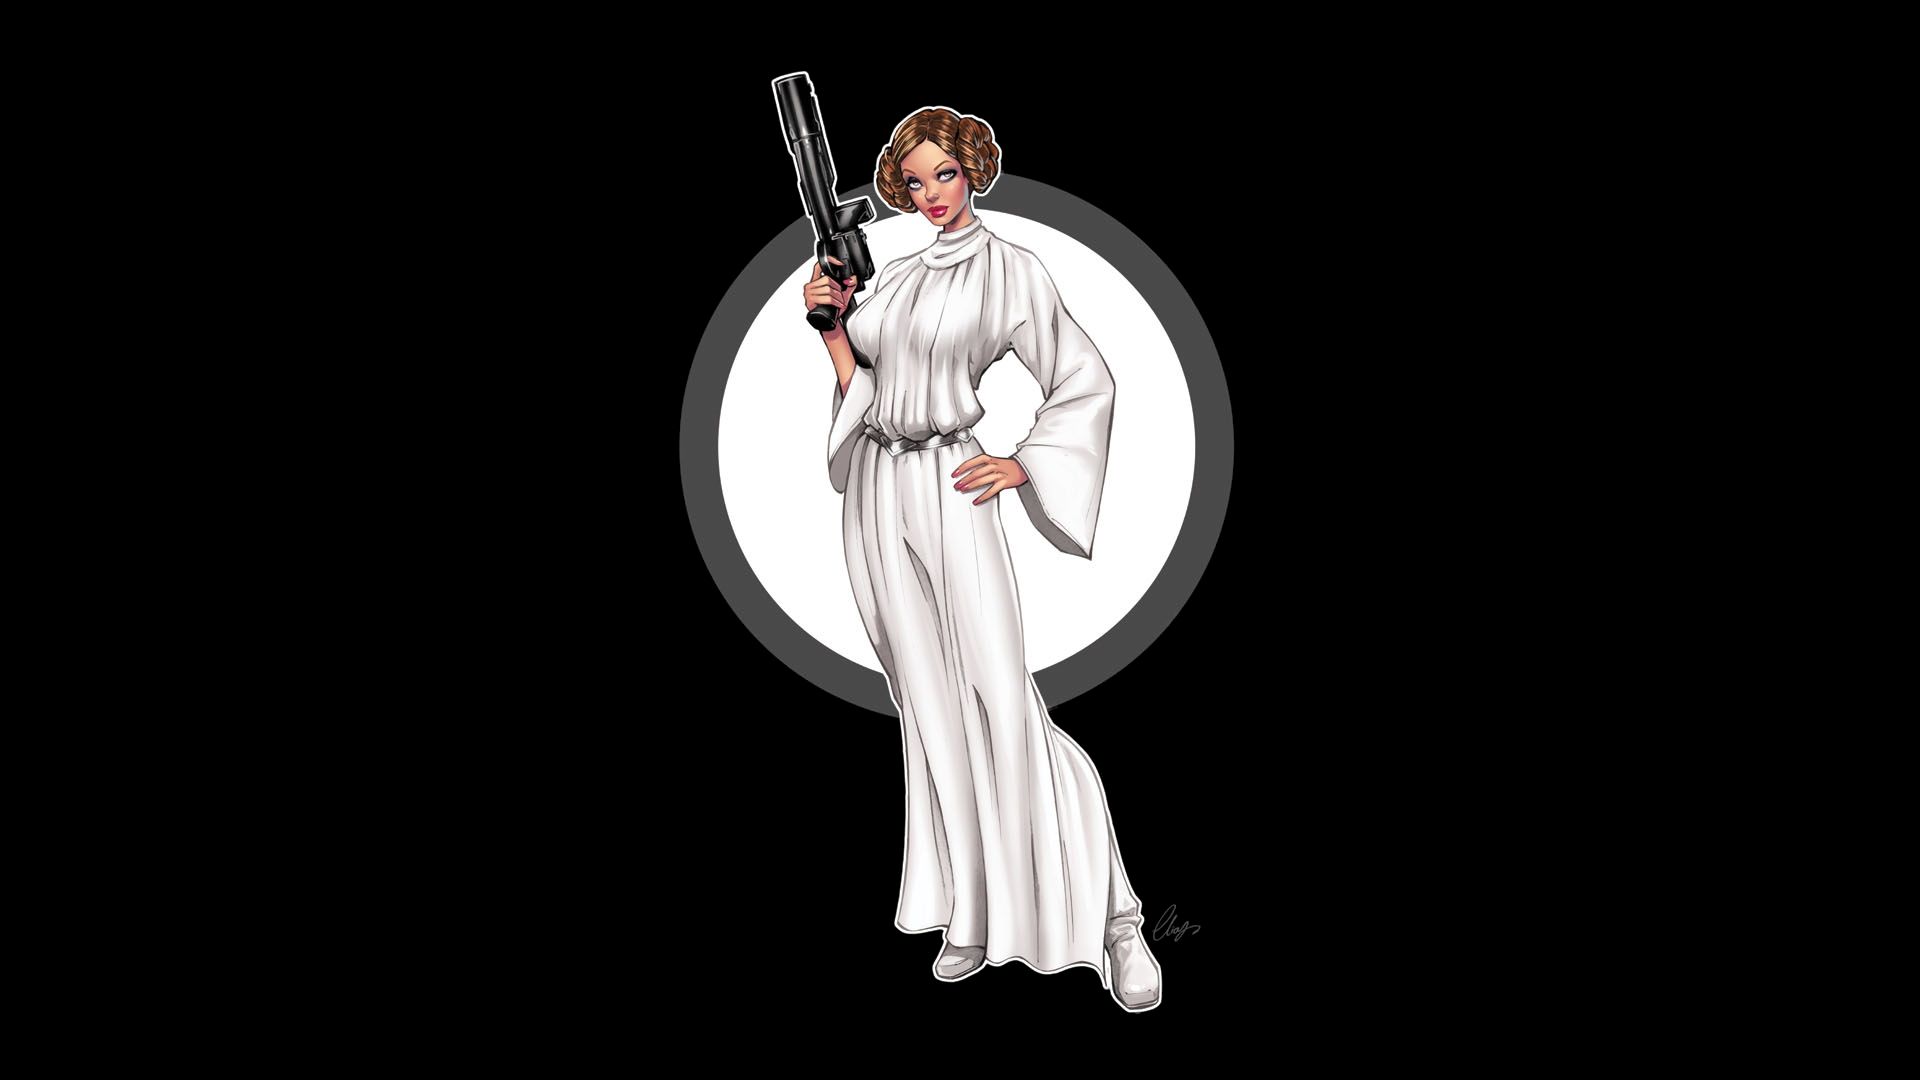 Background Star Wars Leia Wallpaper